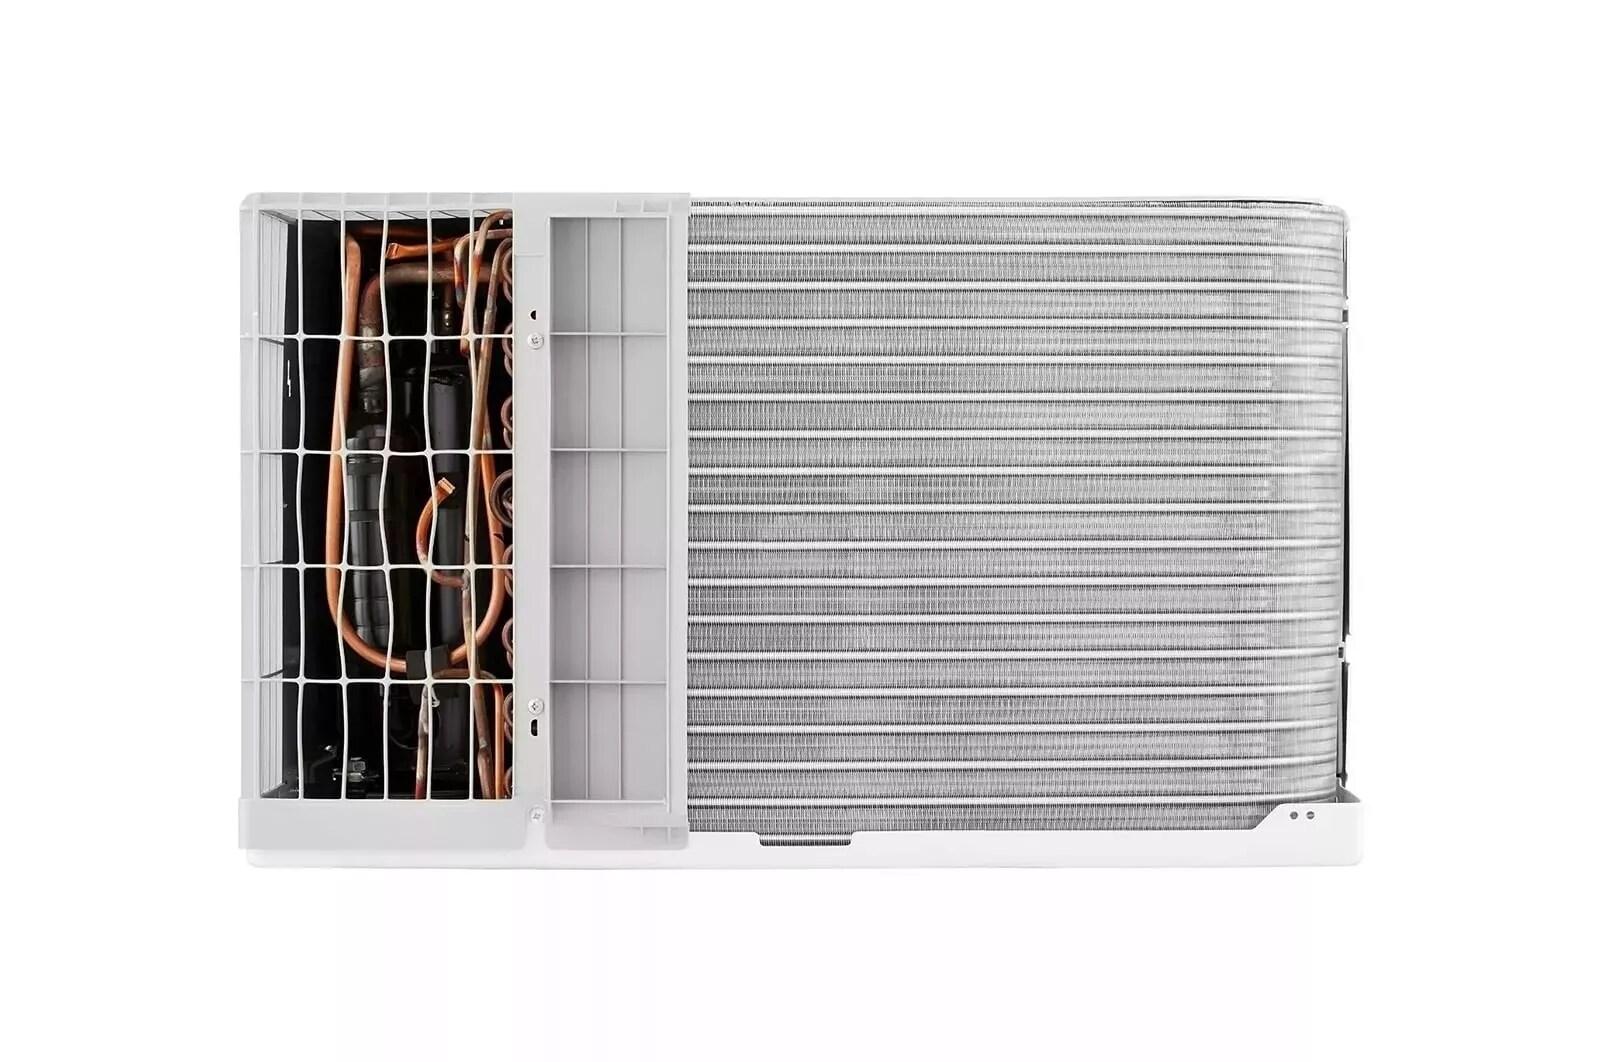 Lg 11,800 BTU 115v Through-the-Wall Air Conditioner